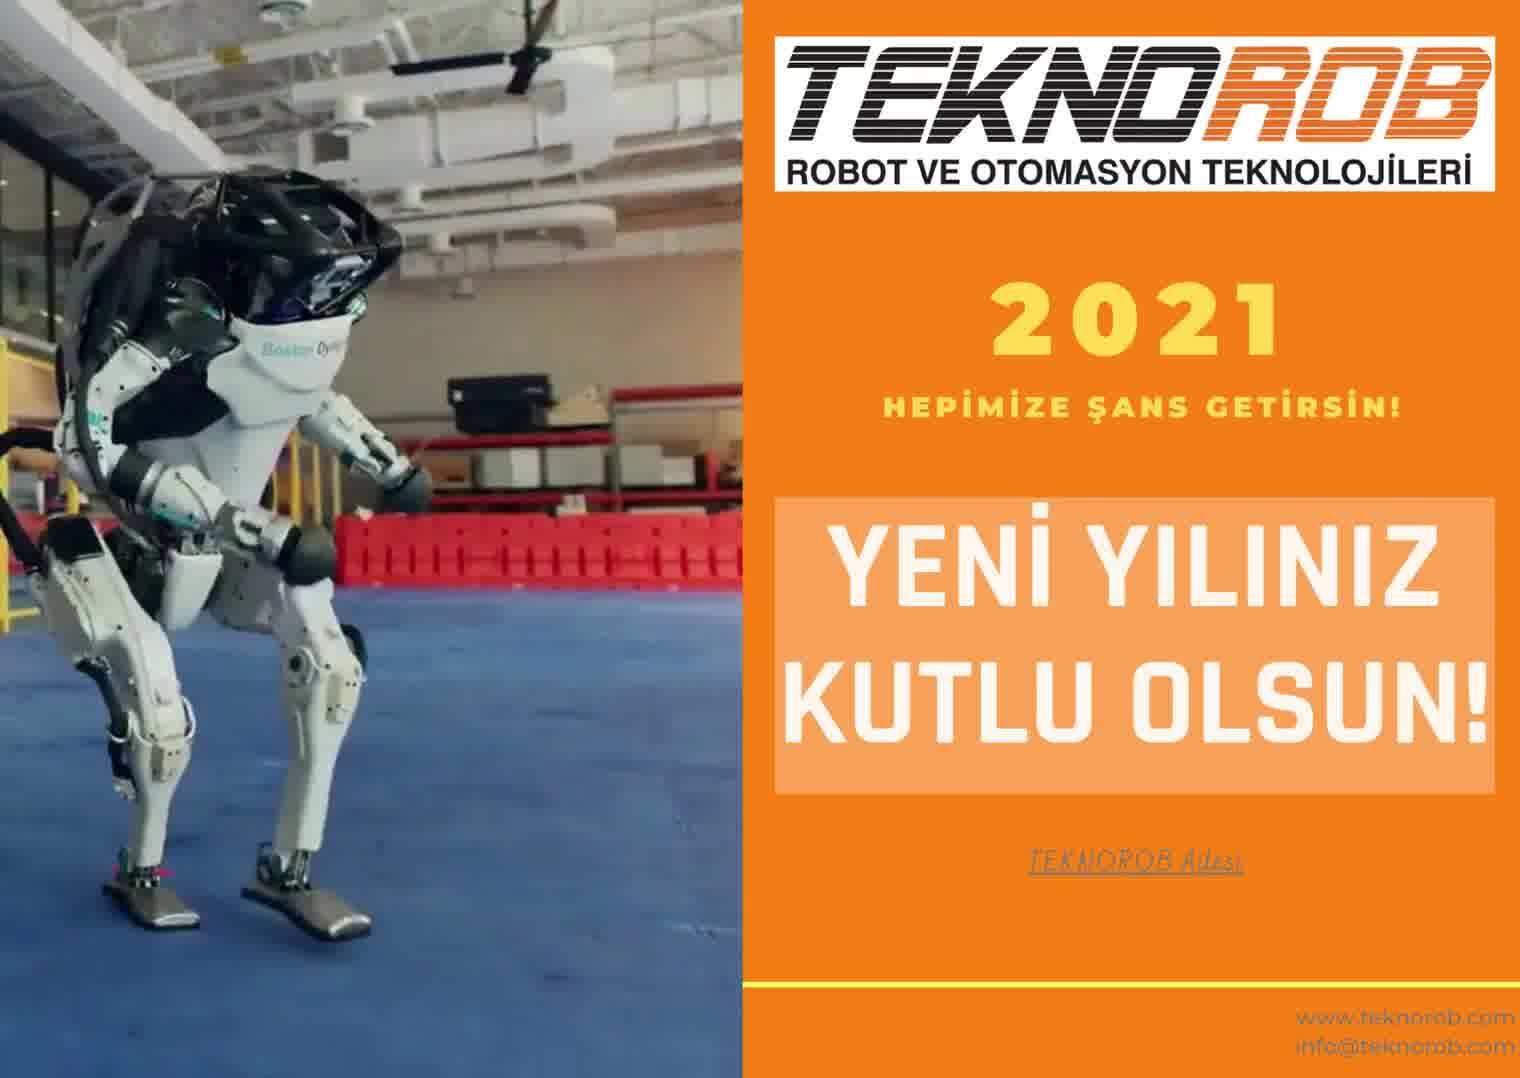 Teknorob Robot